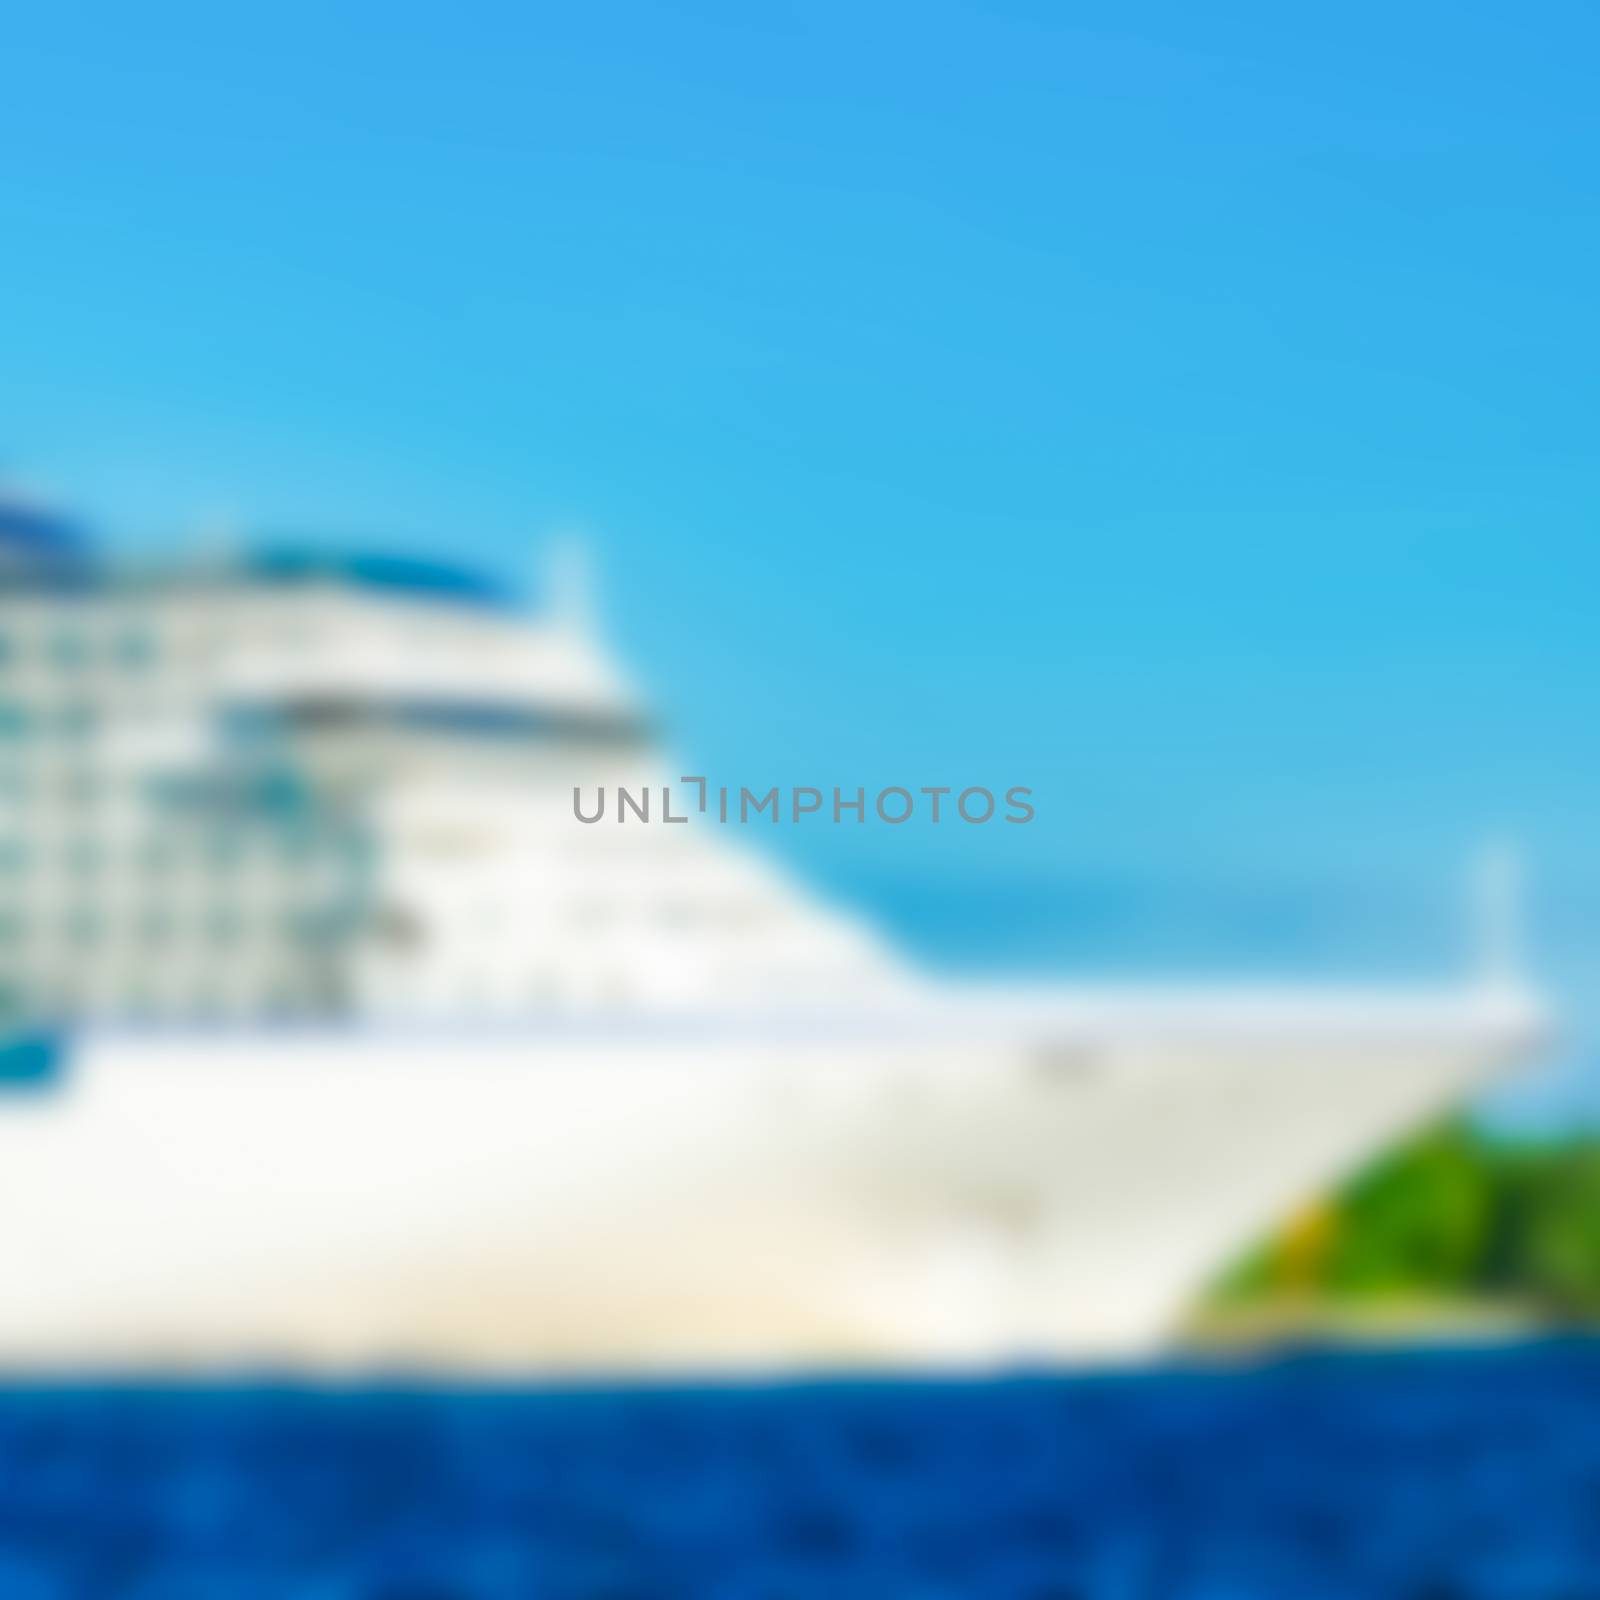 Cruise liner - blurred image by sengnsp